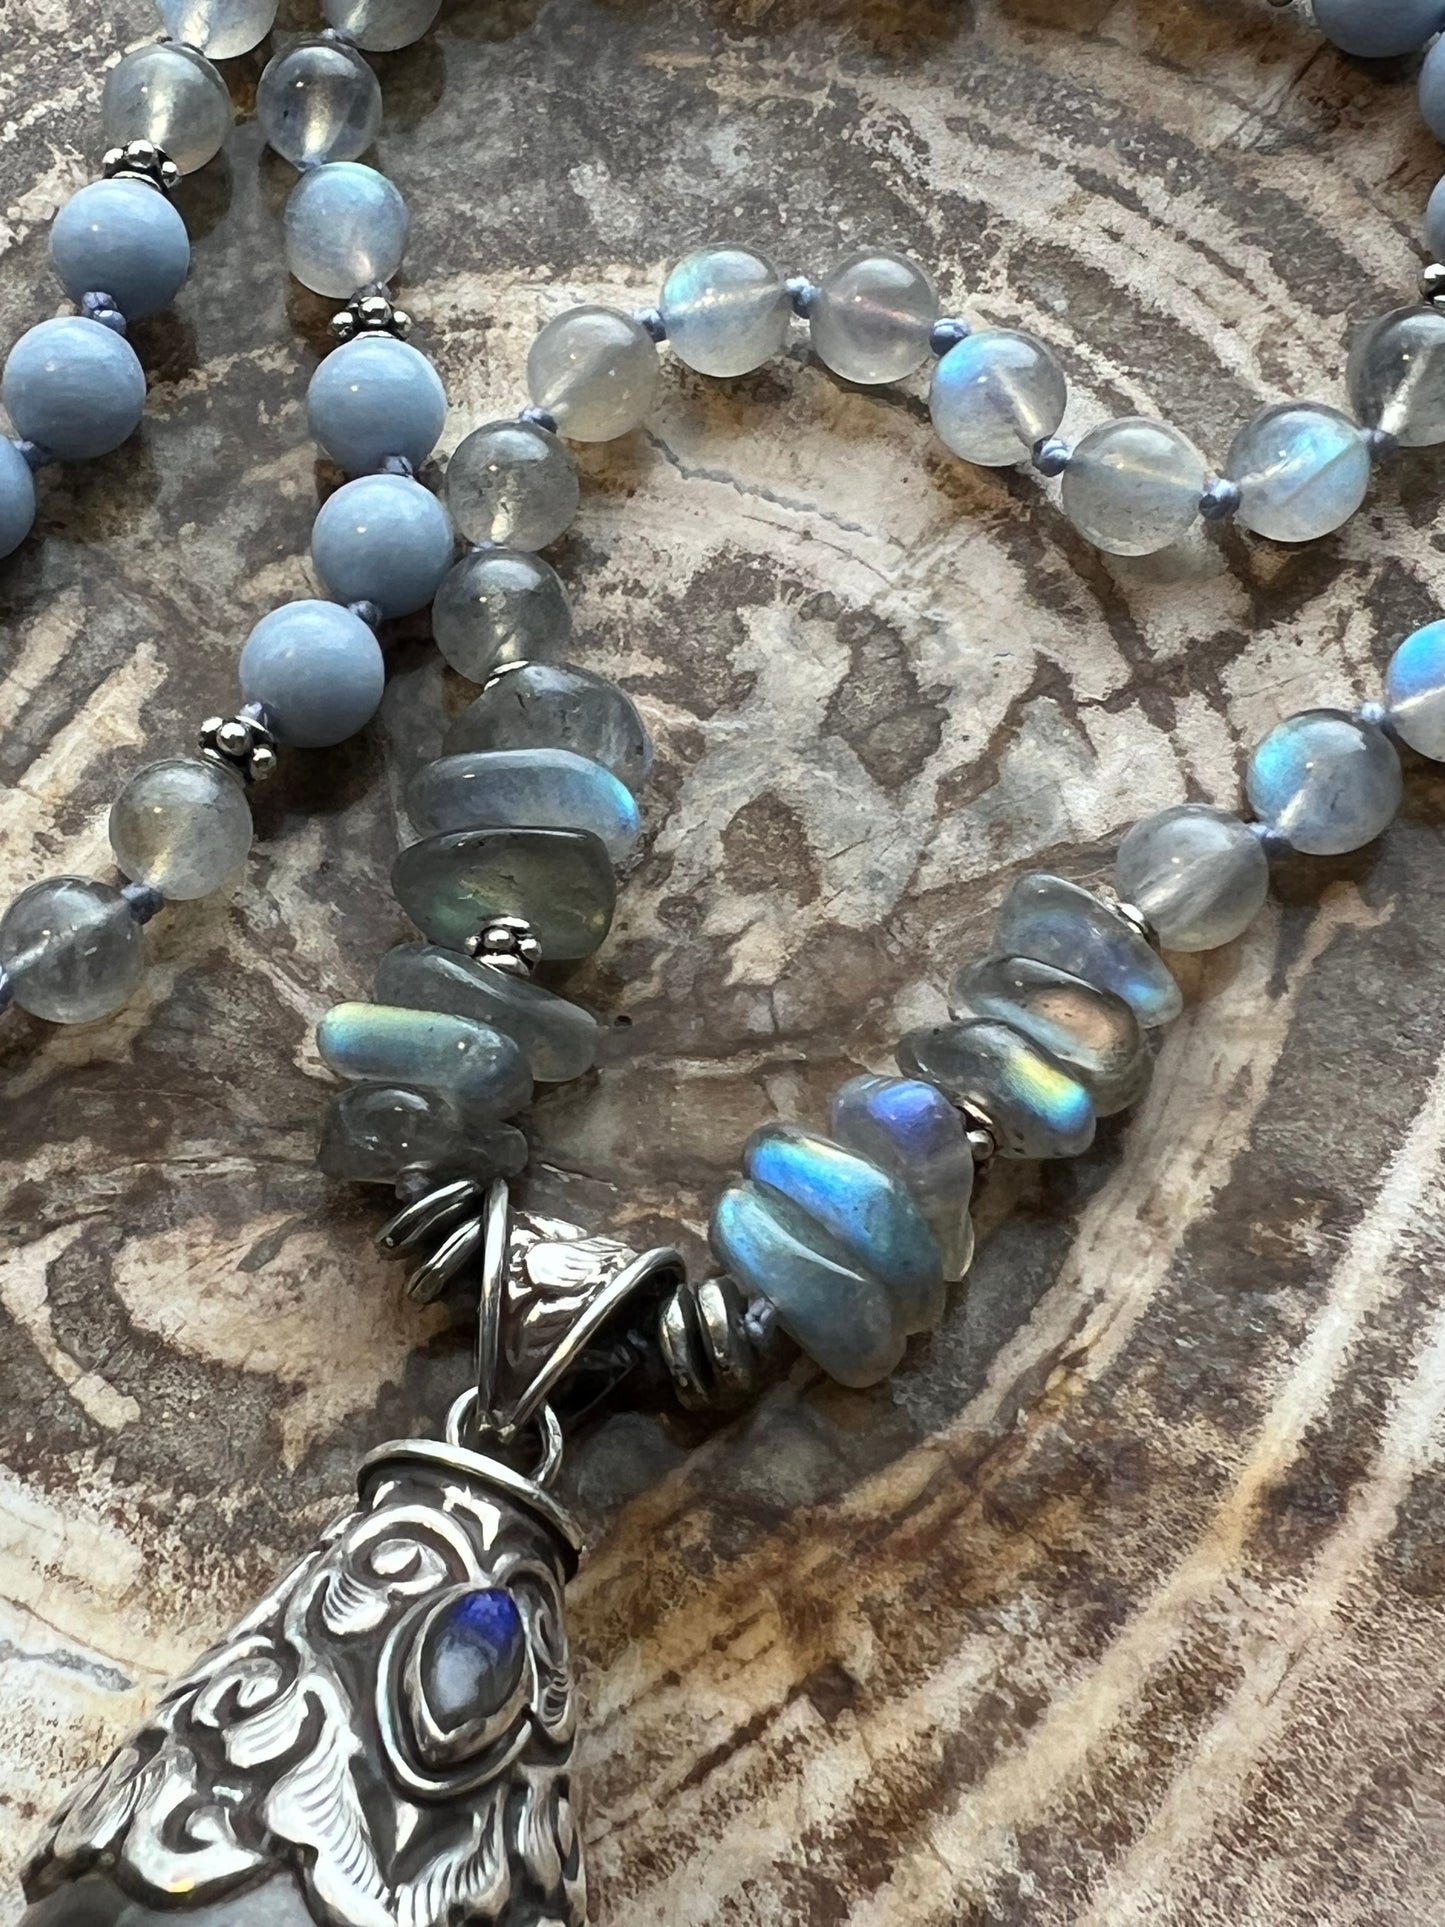 Mālā Half with Labradorite and Angelite Beads and a Himalayan Quartz Bead/Pendant